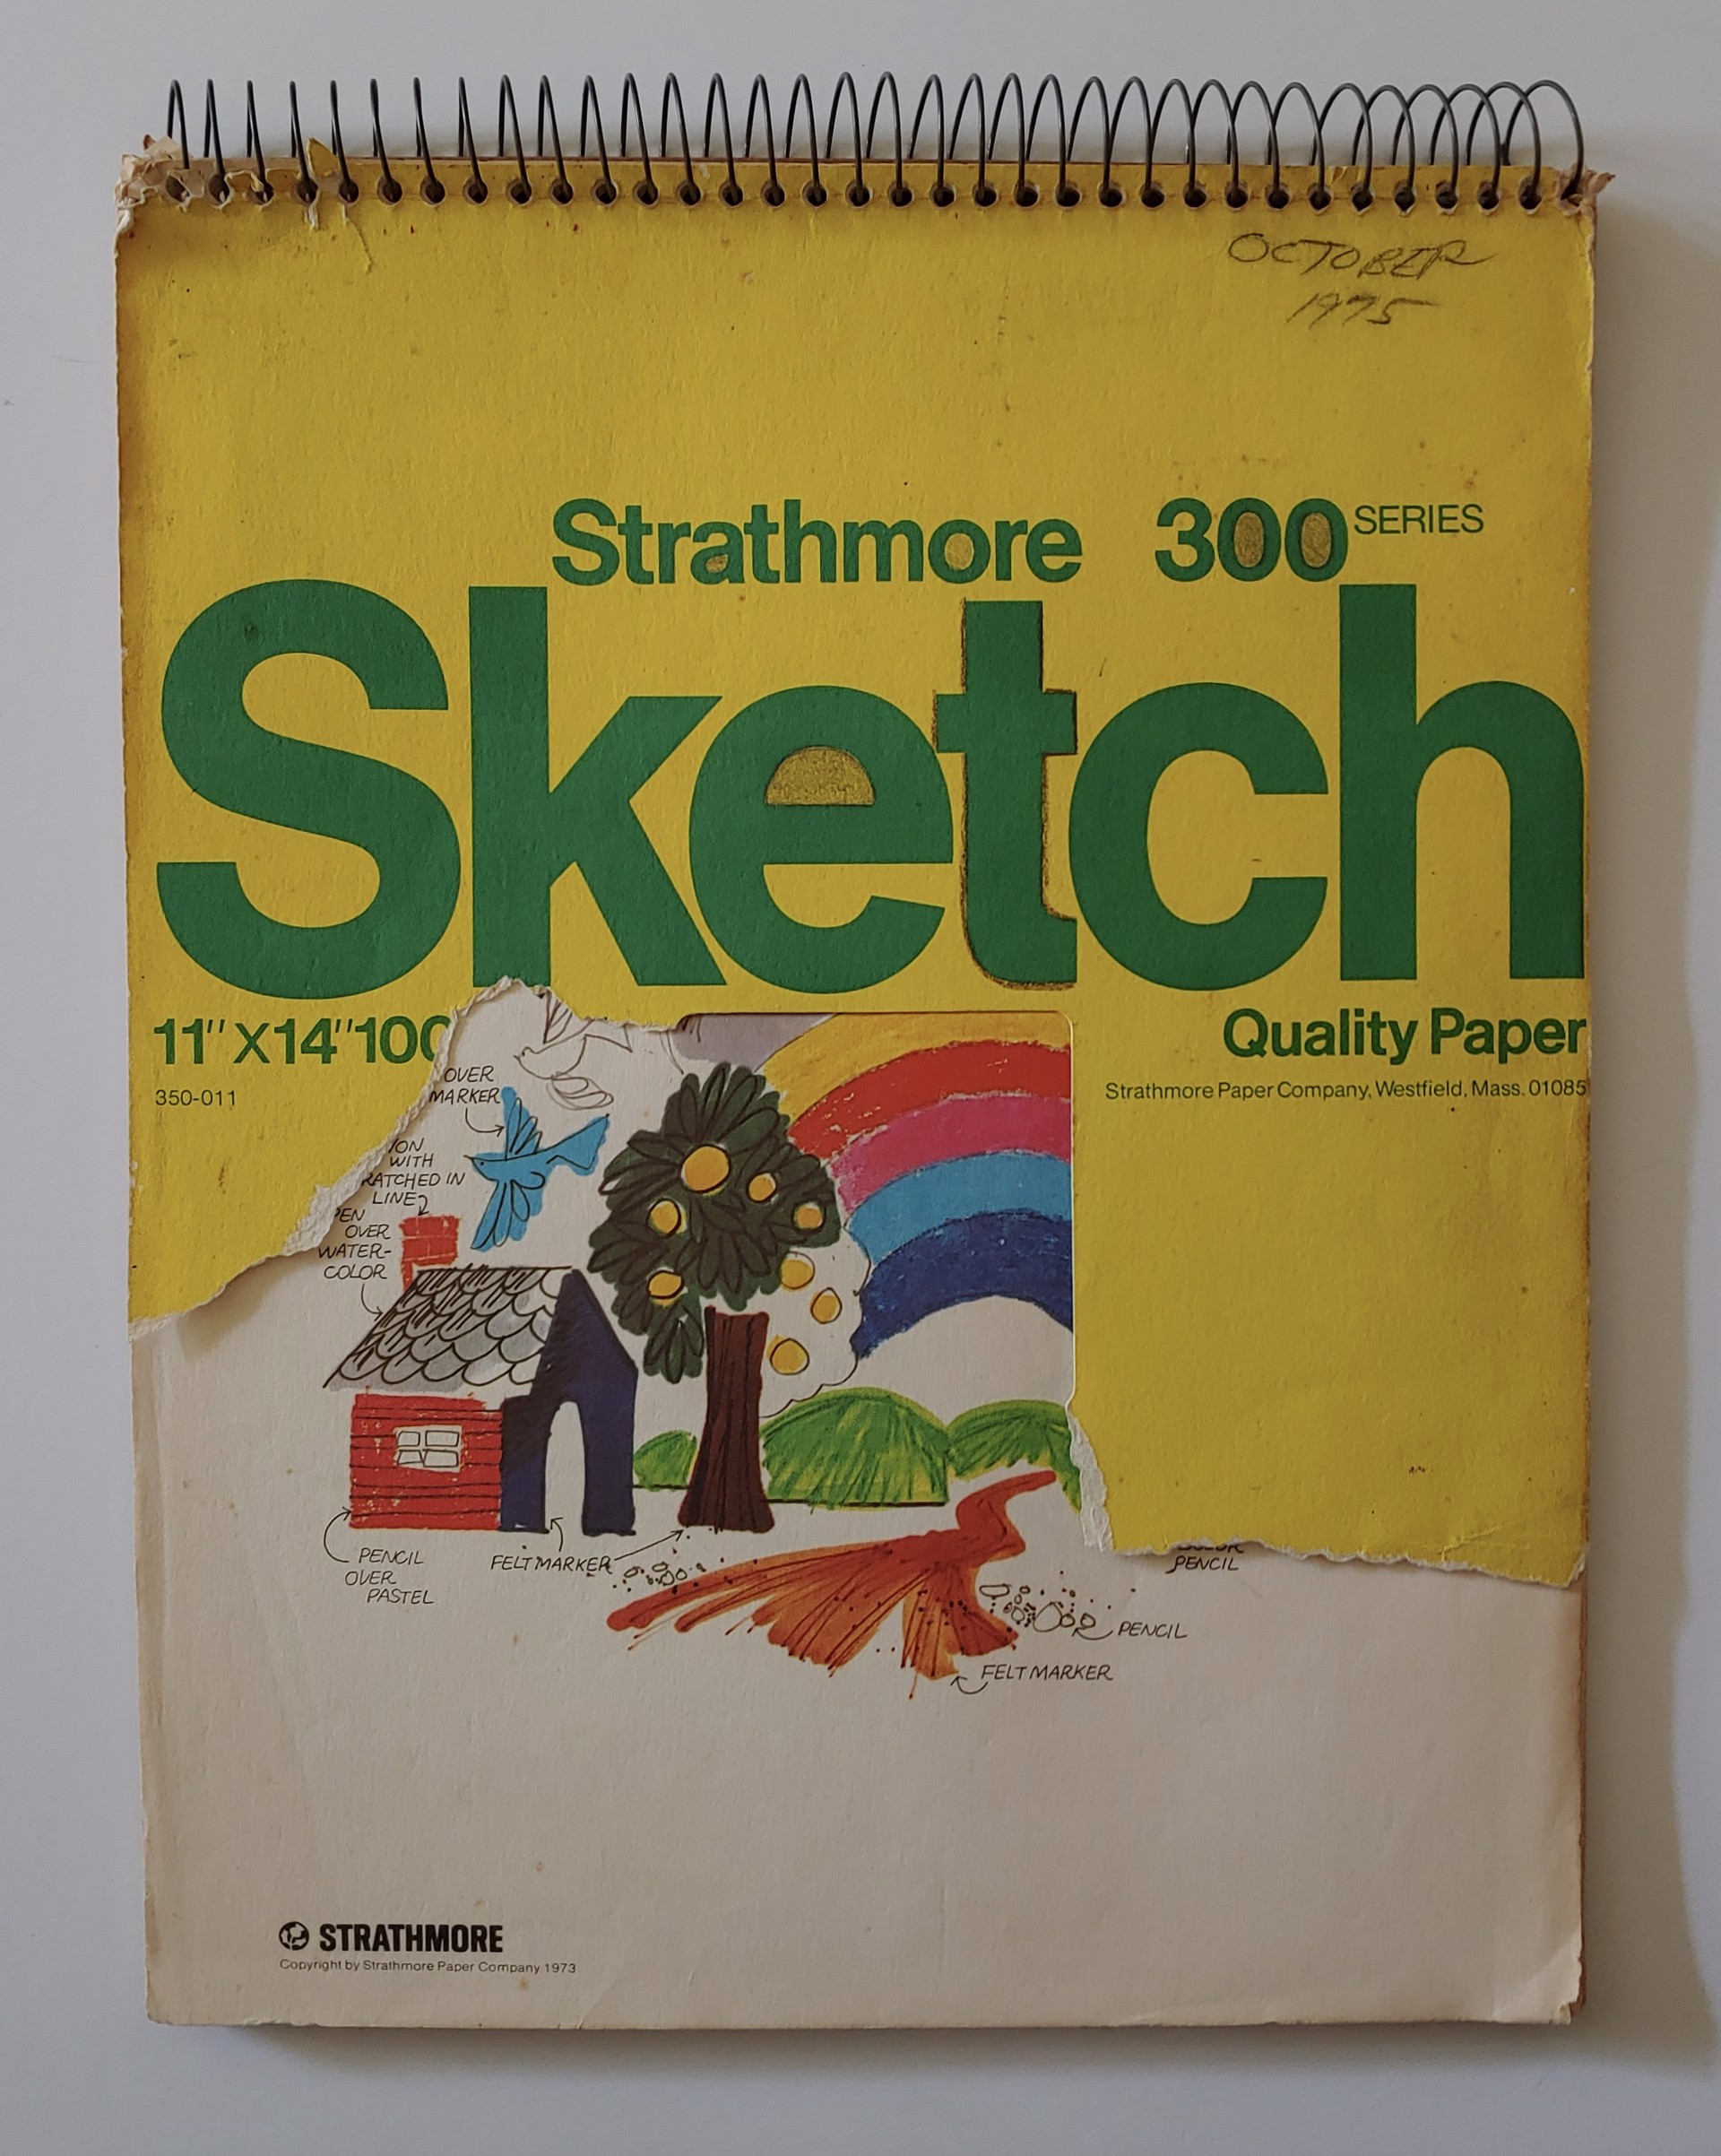 October 1975 Sketchbook by David Amdur